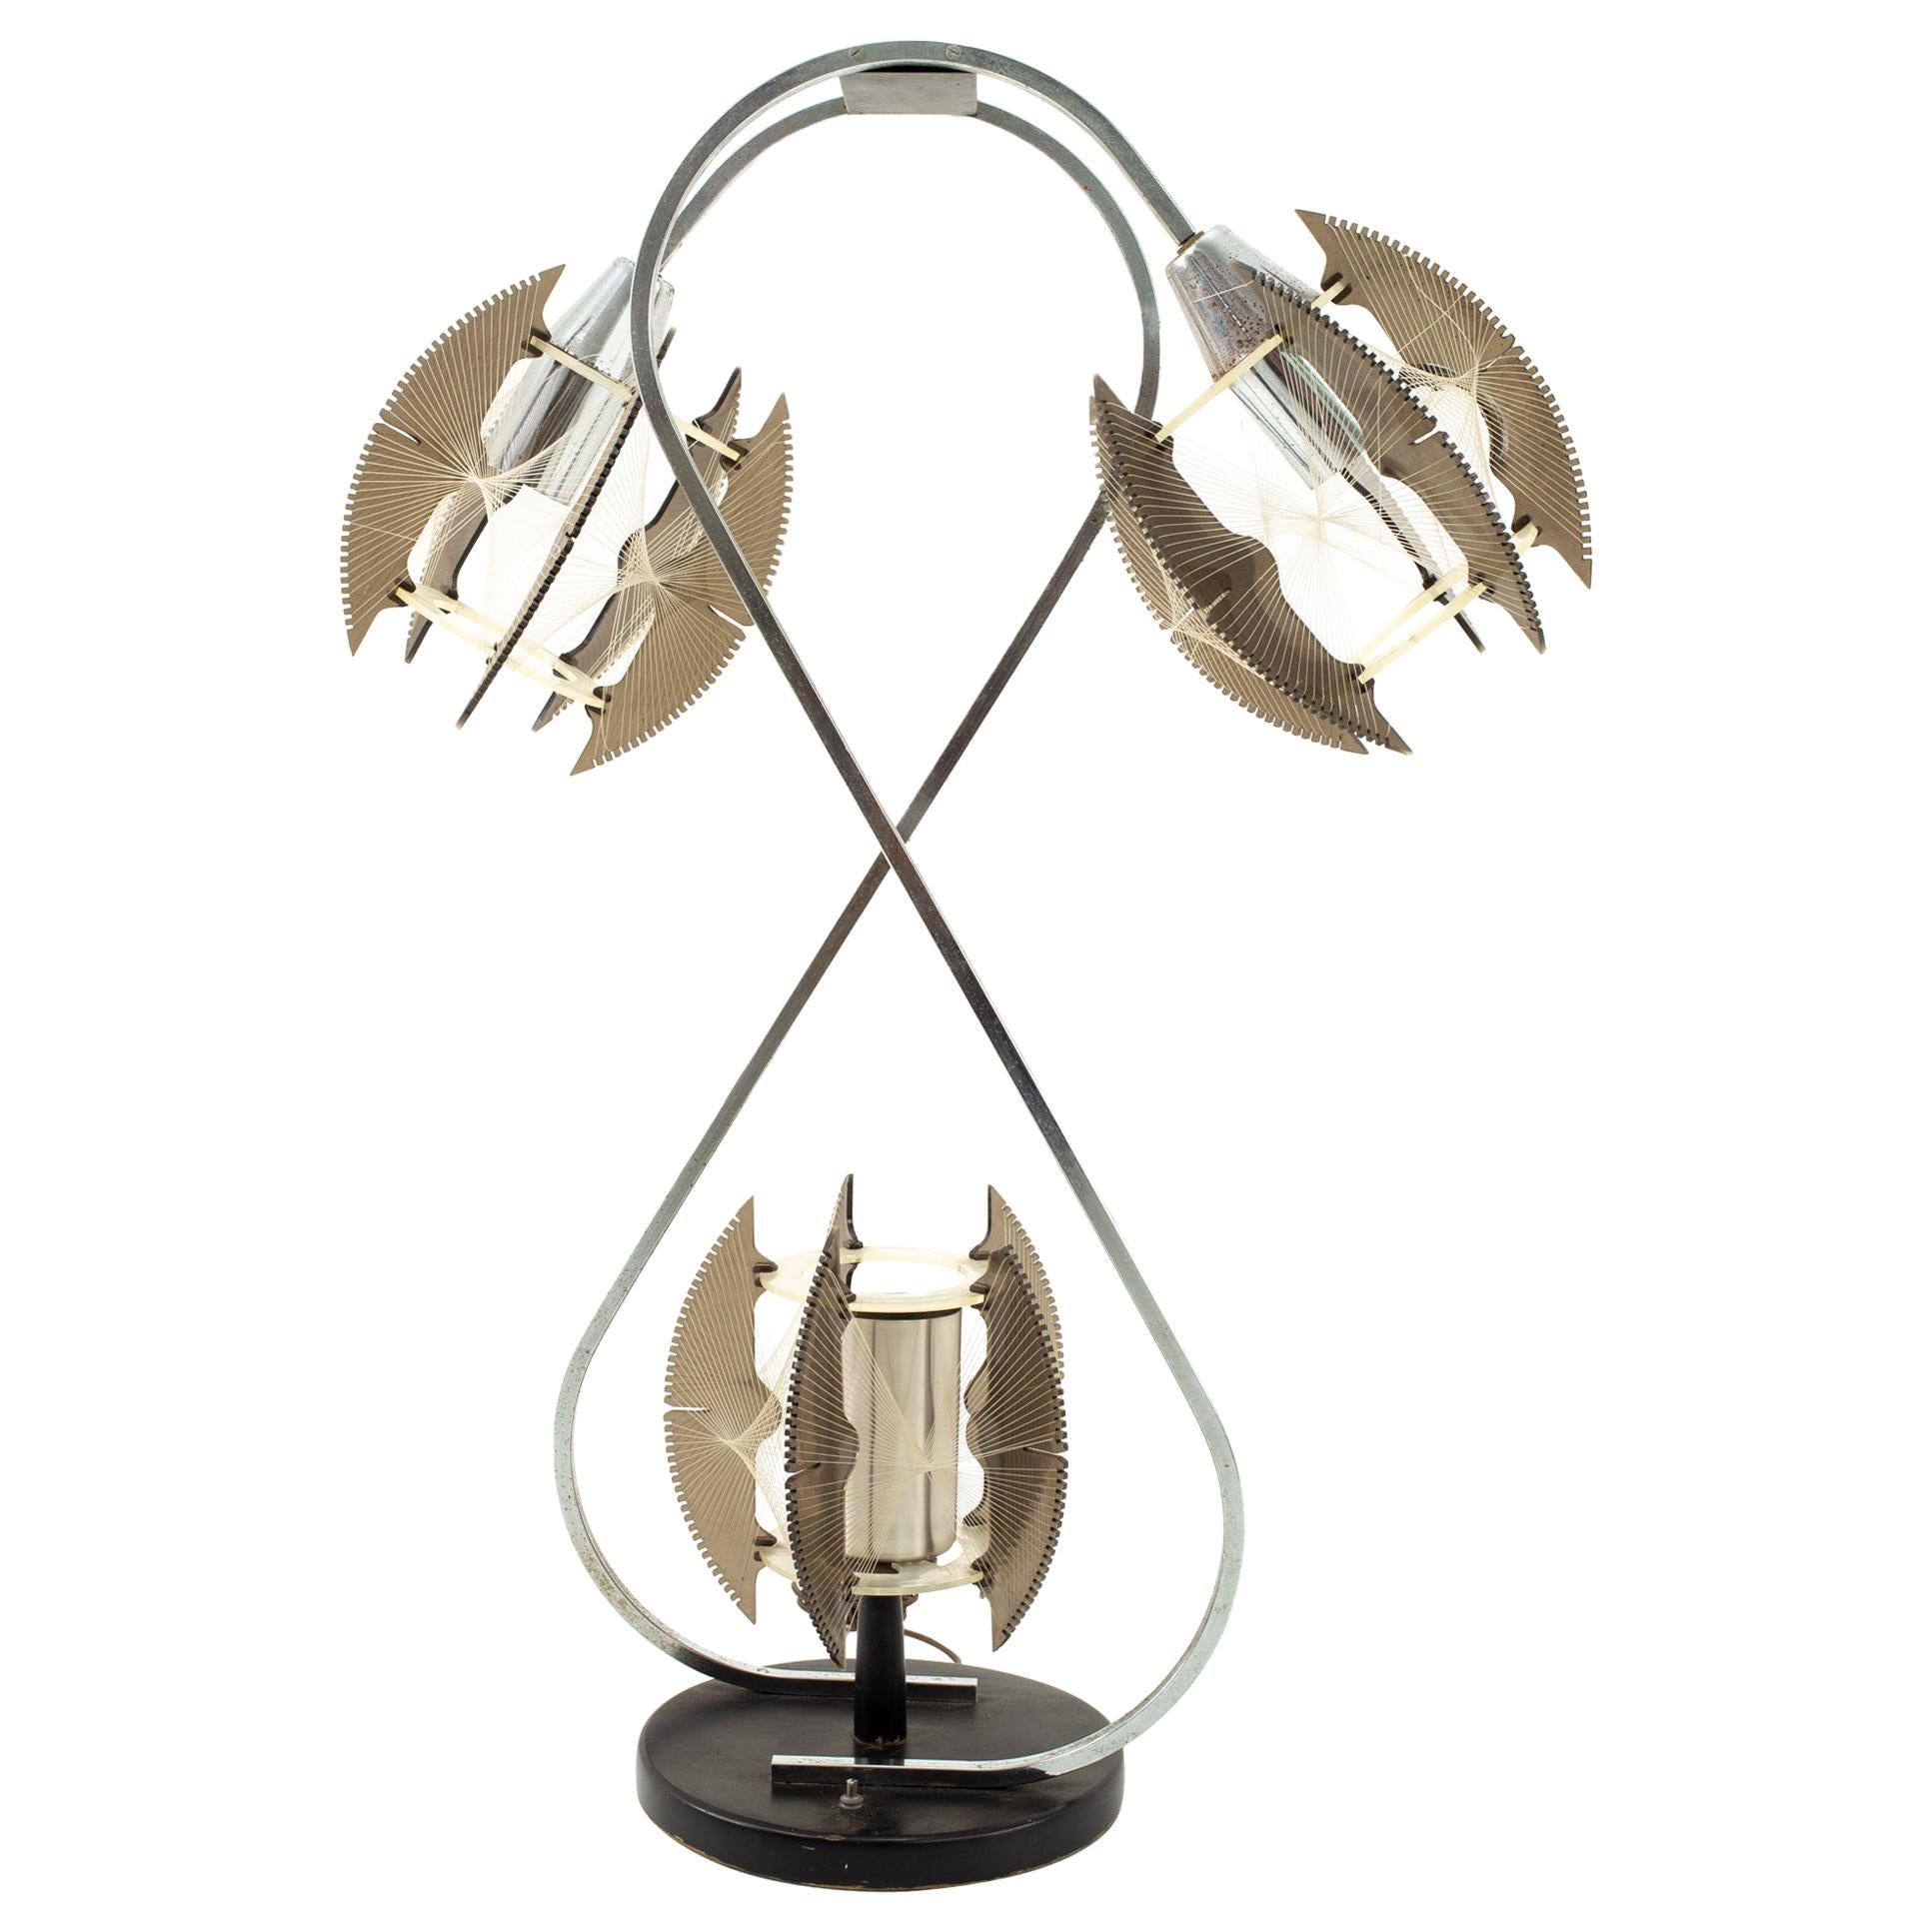 Paul Secon for Sompex Mid Century String and Chrome Lamp (lampe à cordes et chrome)